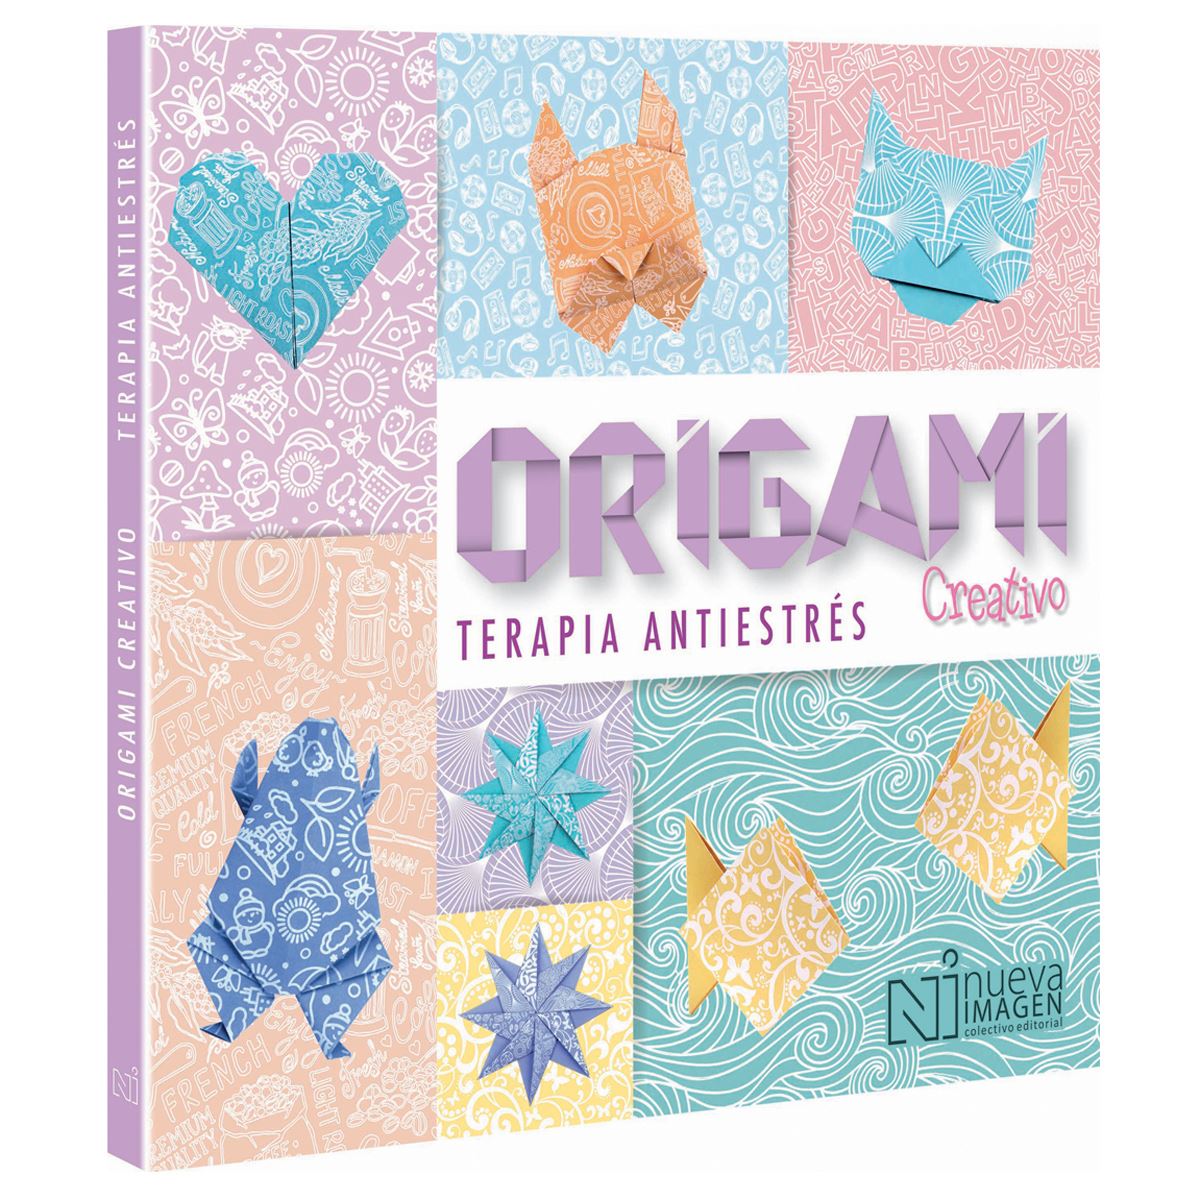 Origami creativo